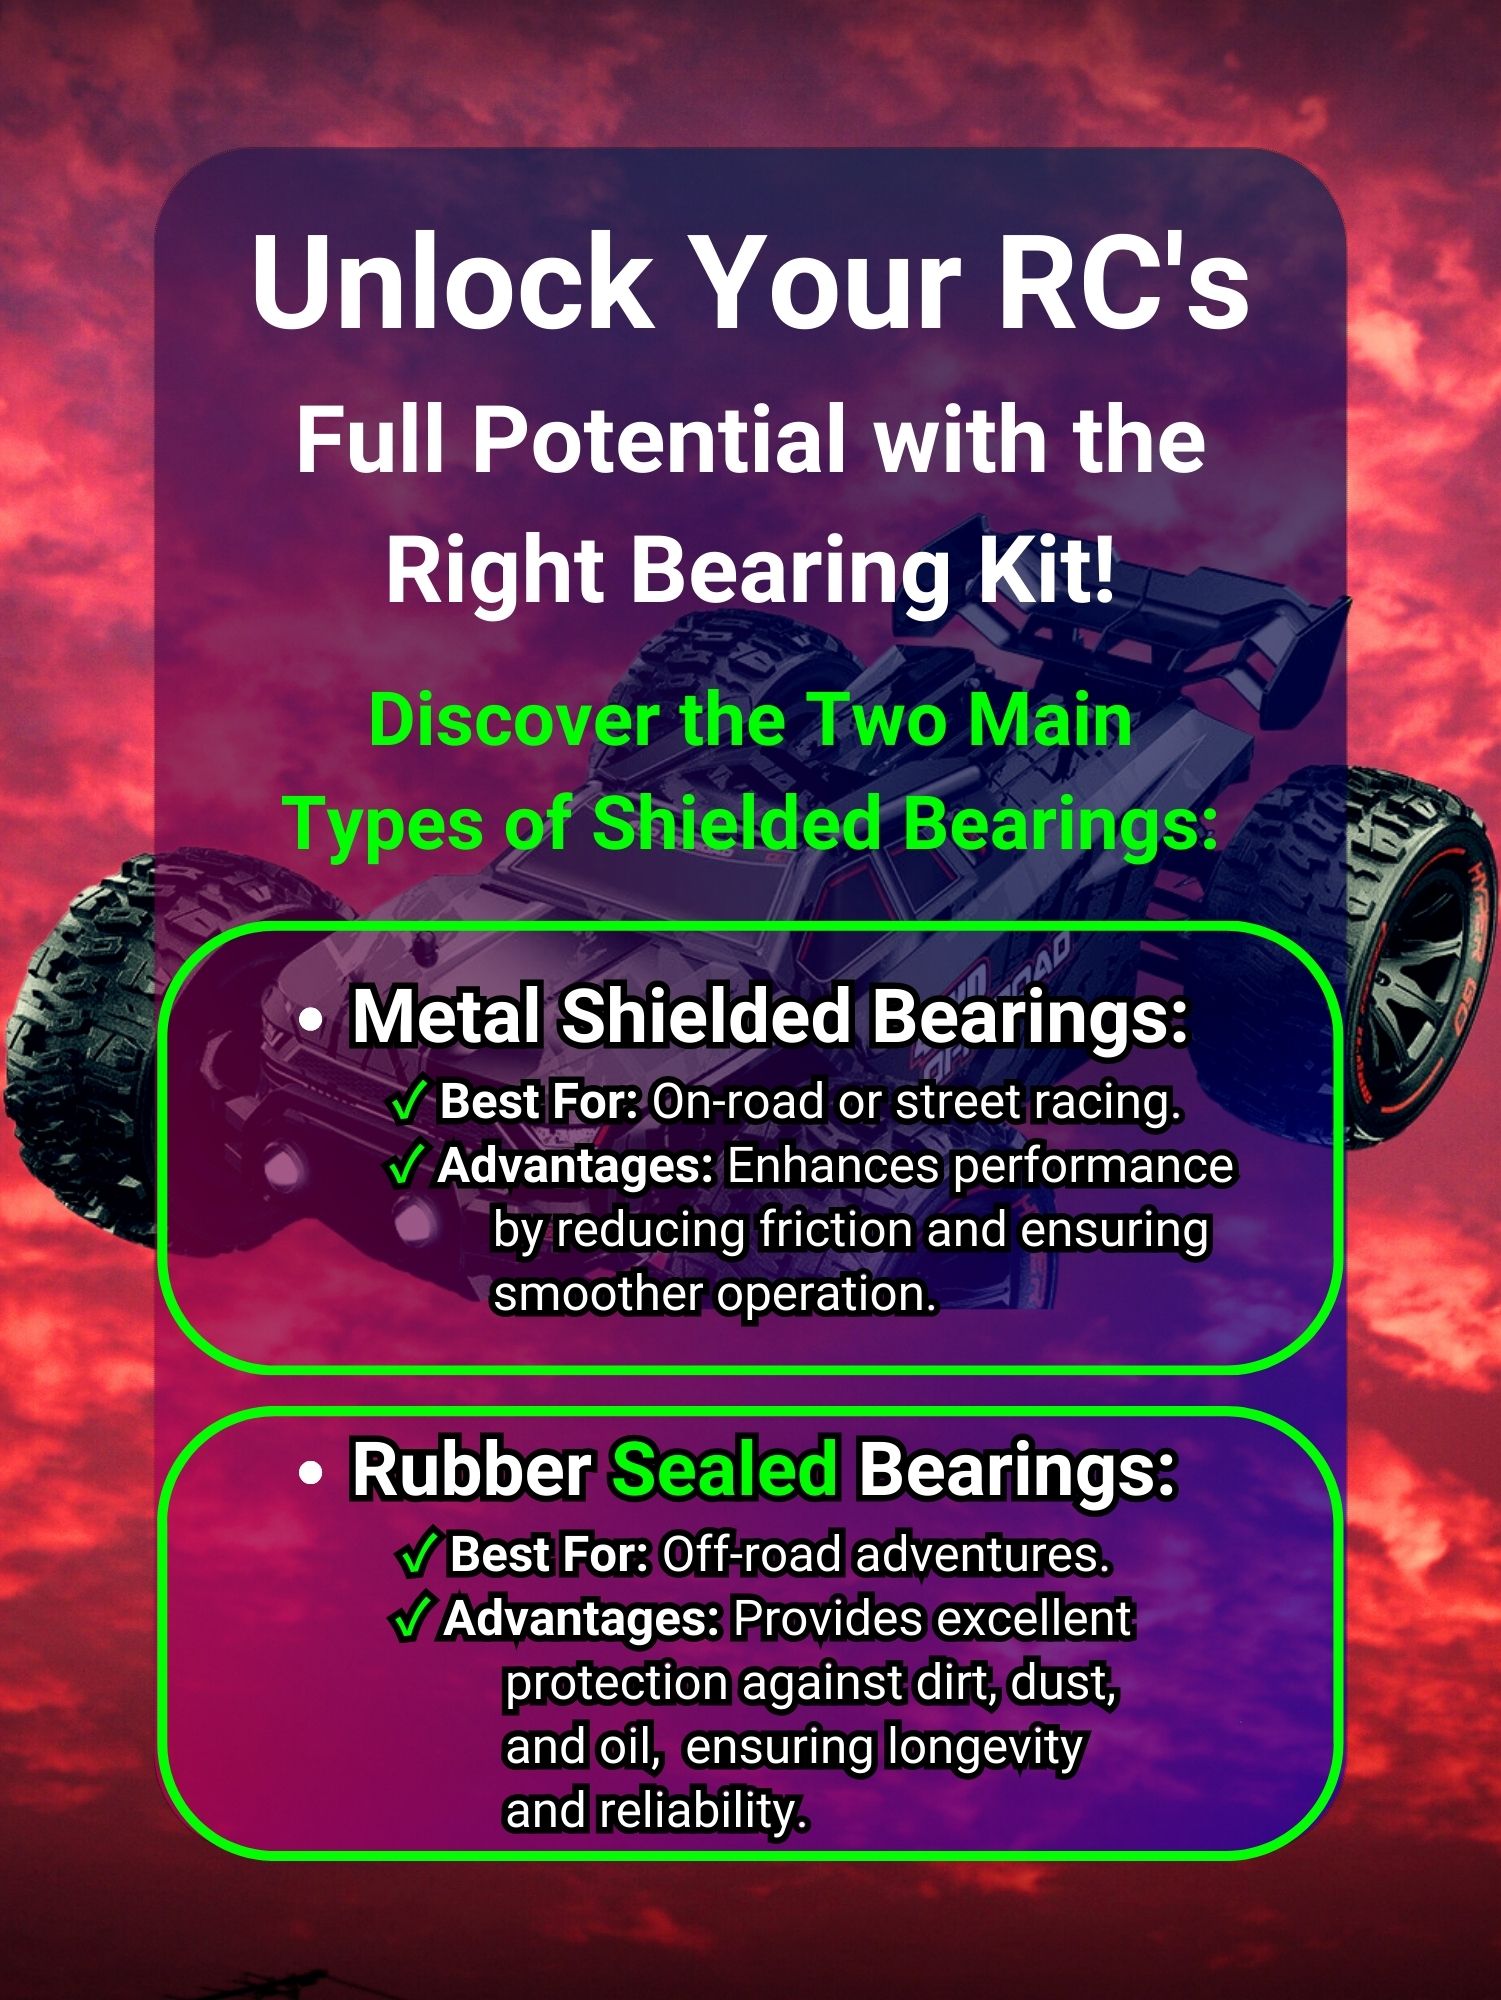 RCScrewZ Metal Shielded Bearings sch022b for Schumacher Cougar SV/Pro #K111/K112 - Picture 2 of 12